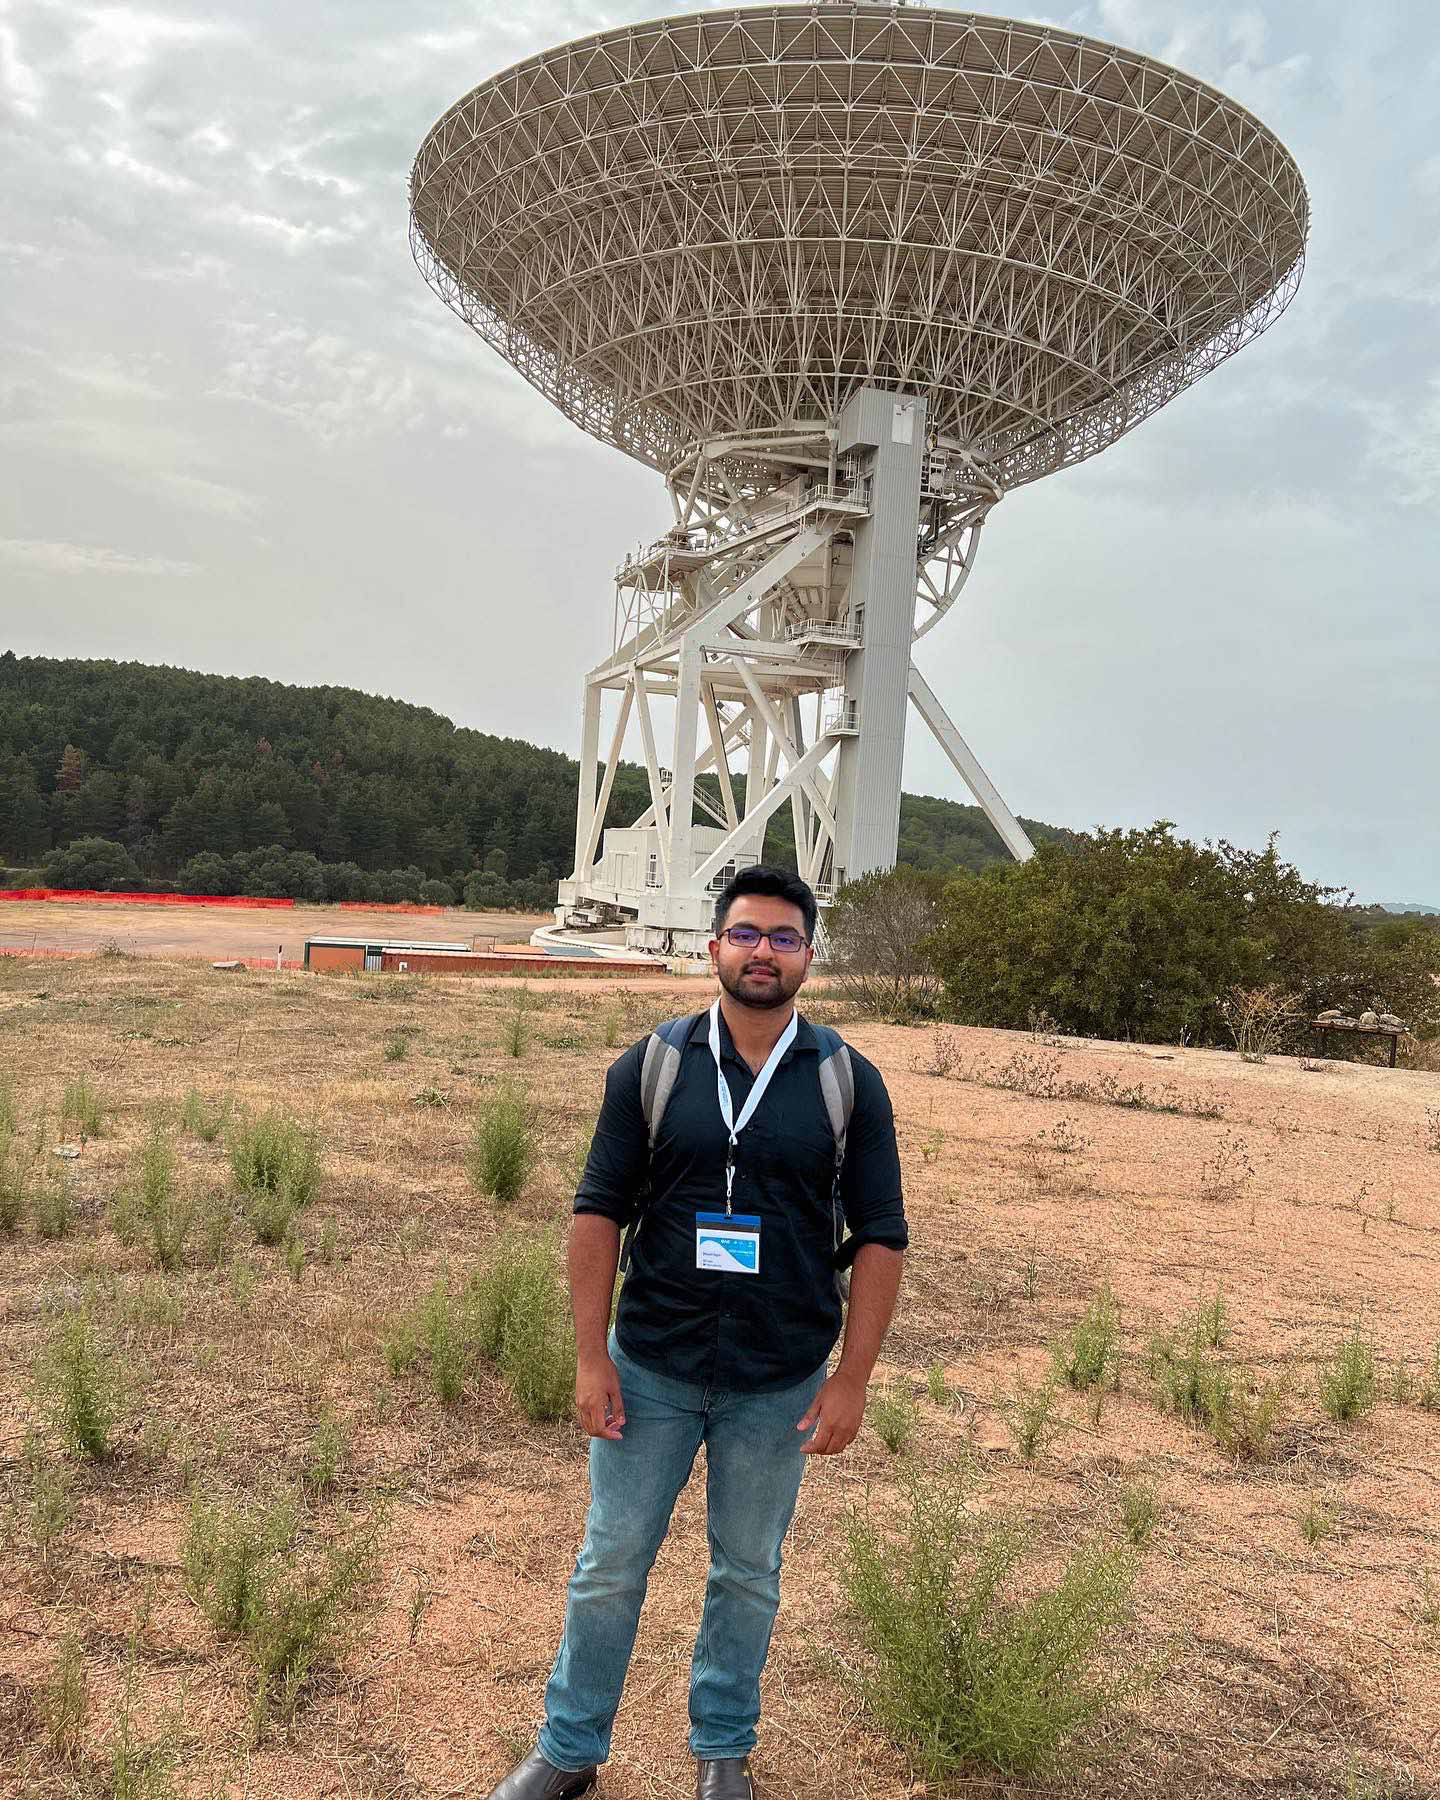 Sardinia 64 m Telescope (CASPER 2022 workshop)